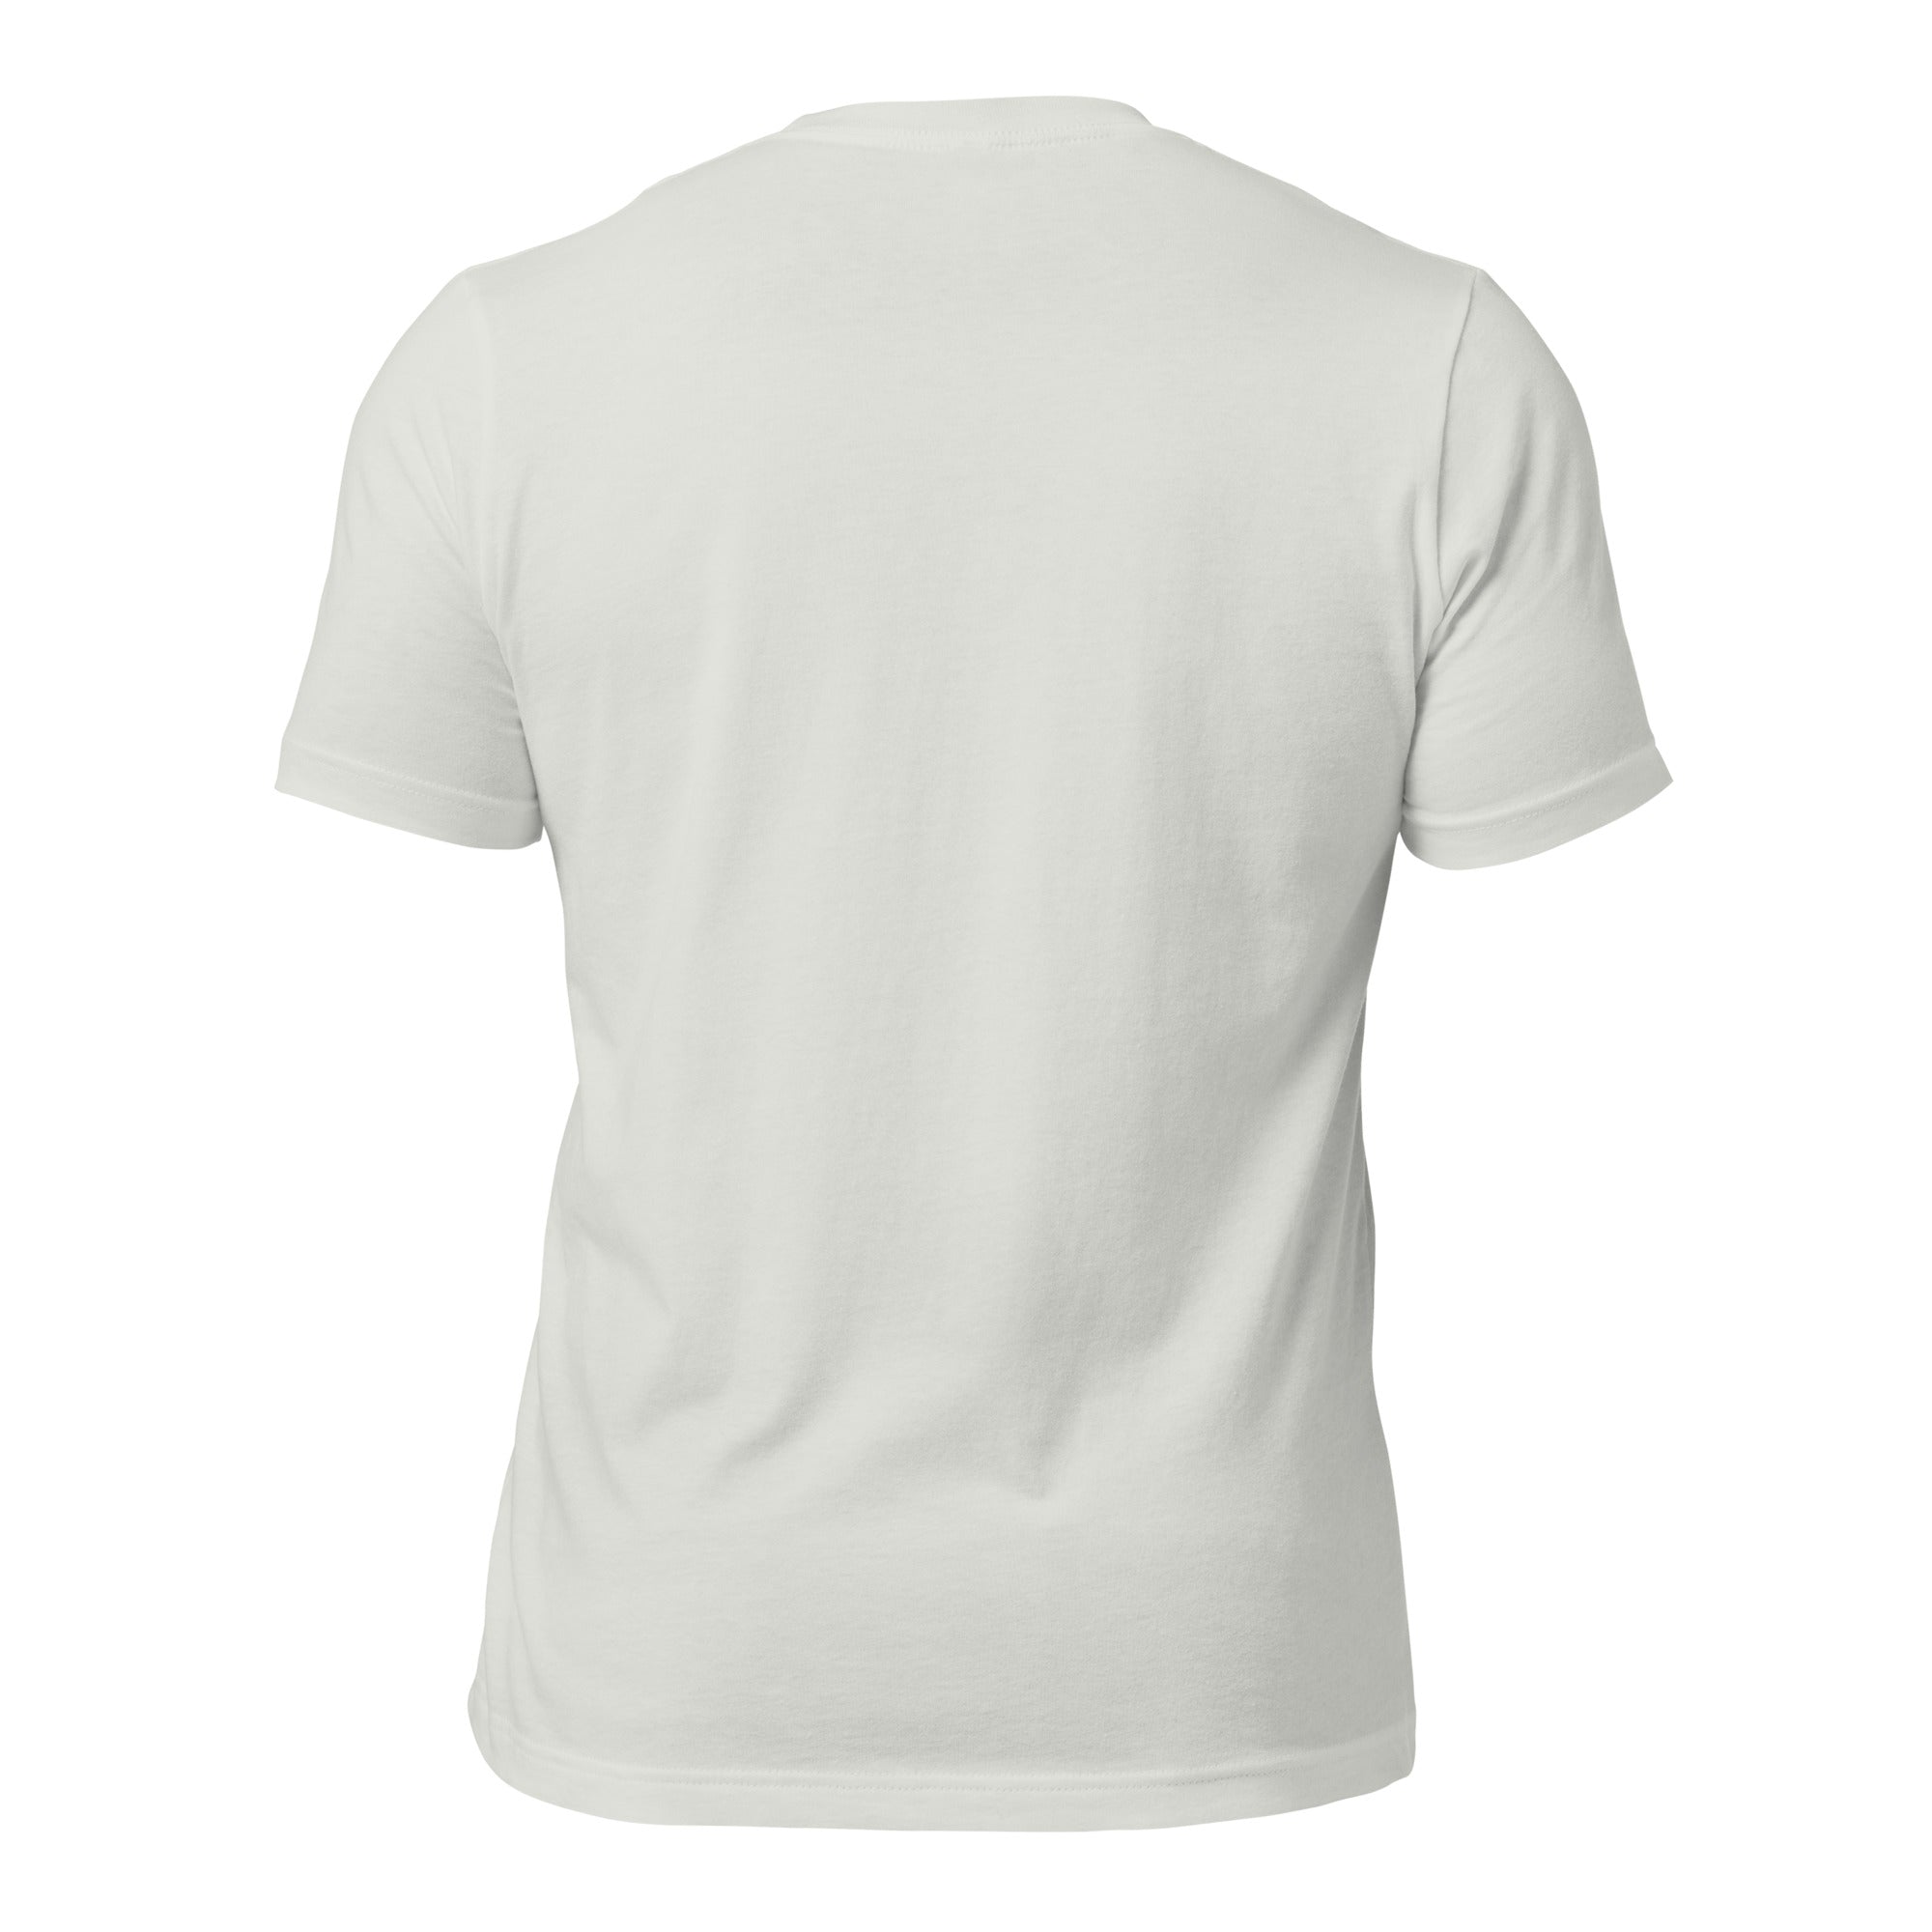 T-shirt en coton unisexe Tiki Kombi sur fond clair